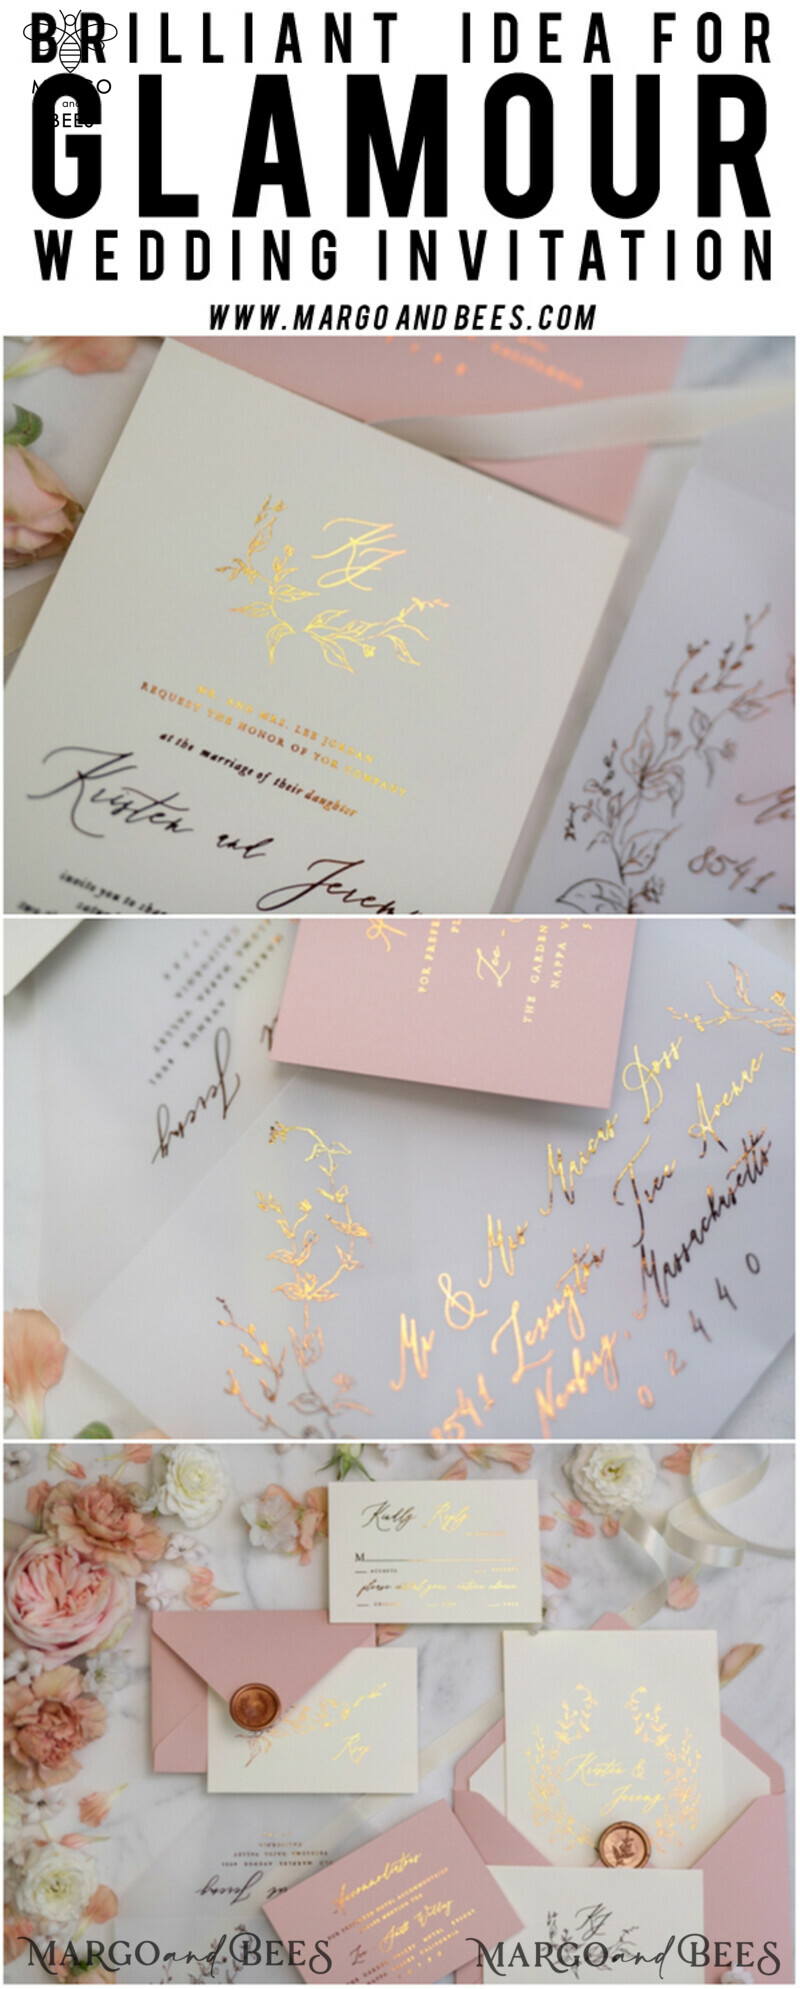 Bespoke Vellum Wedding Invitation Suite: Romantic Blush Pink and Glamour Gold Foil for an Elegant Golden Wedding-39